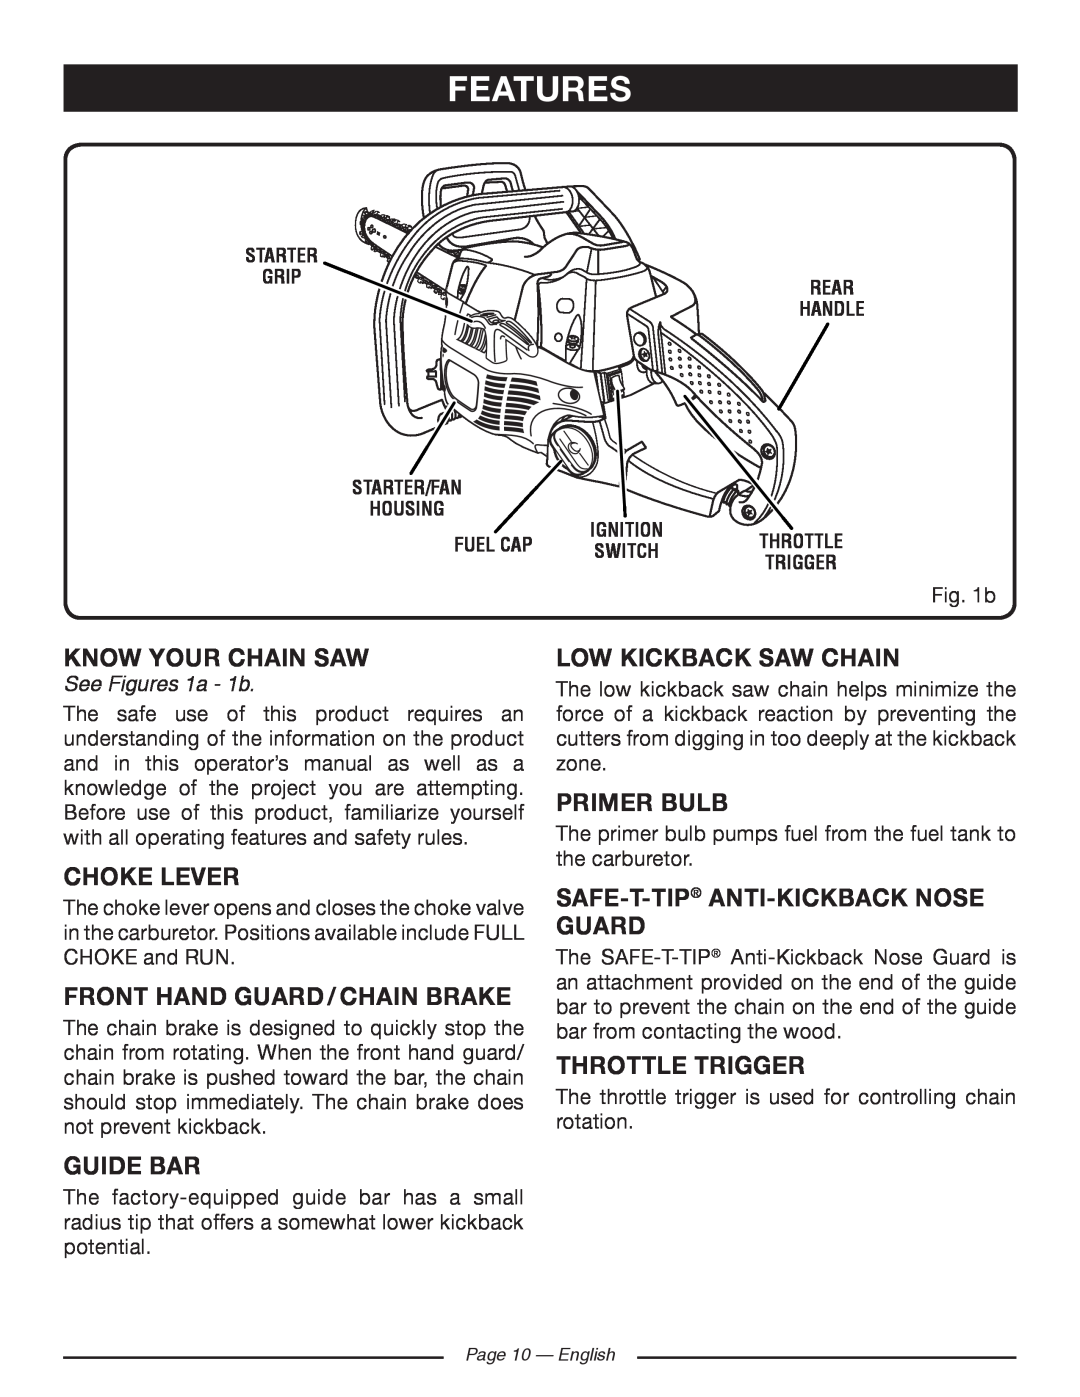 Ryobi RY10520 Know Your Chain Saw, Choke Lever, Front Hand Guard / Chain Brake, Low Kickback Saw Chain, Primer Bulb 